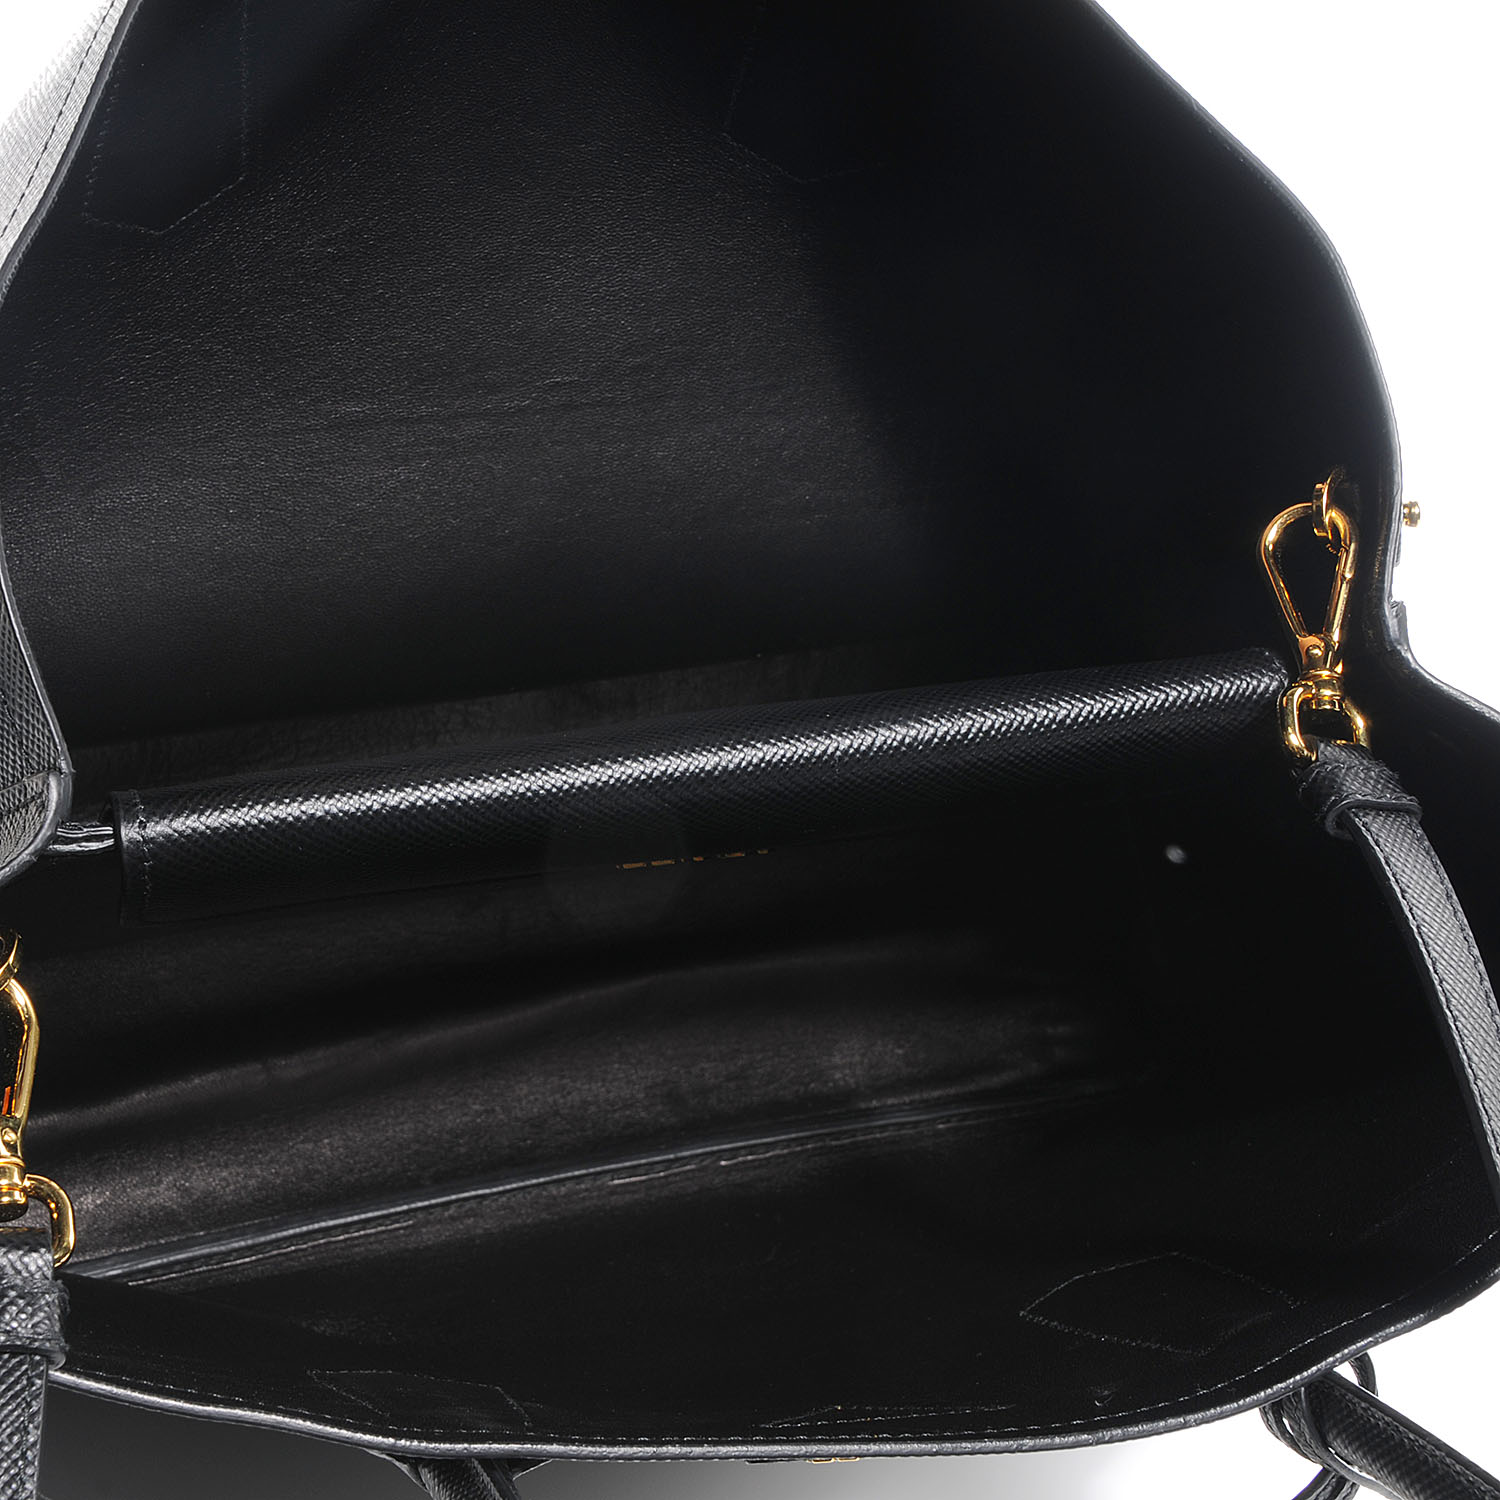 PRADA Saffiano Cuir Large Double Bag Nero Black 61697